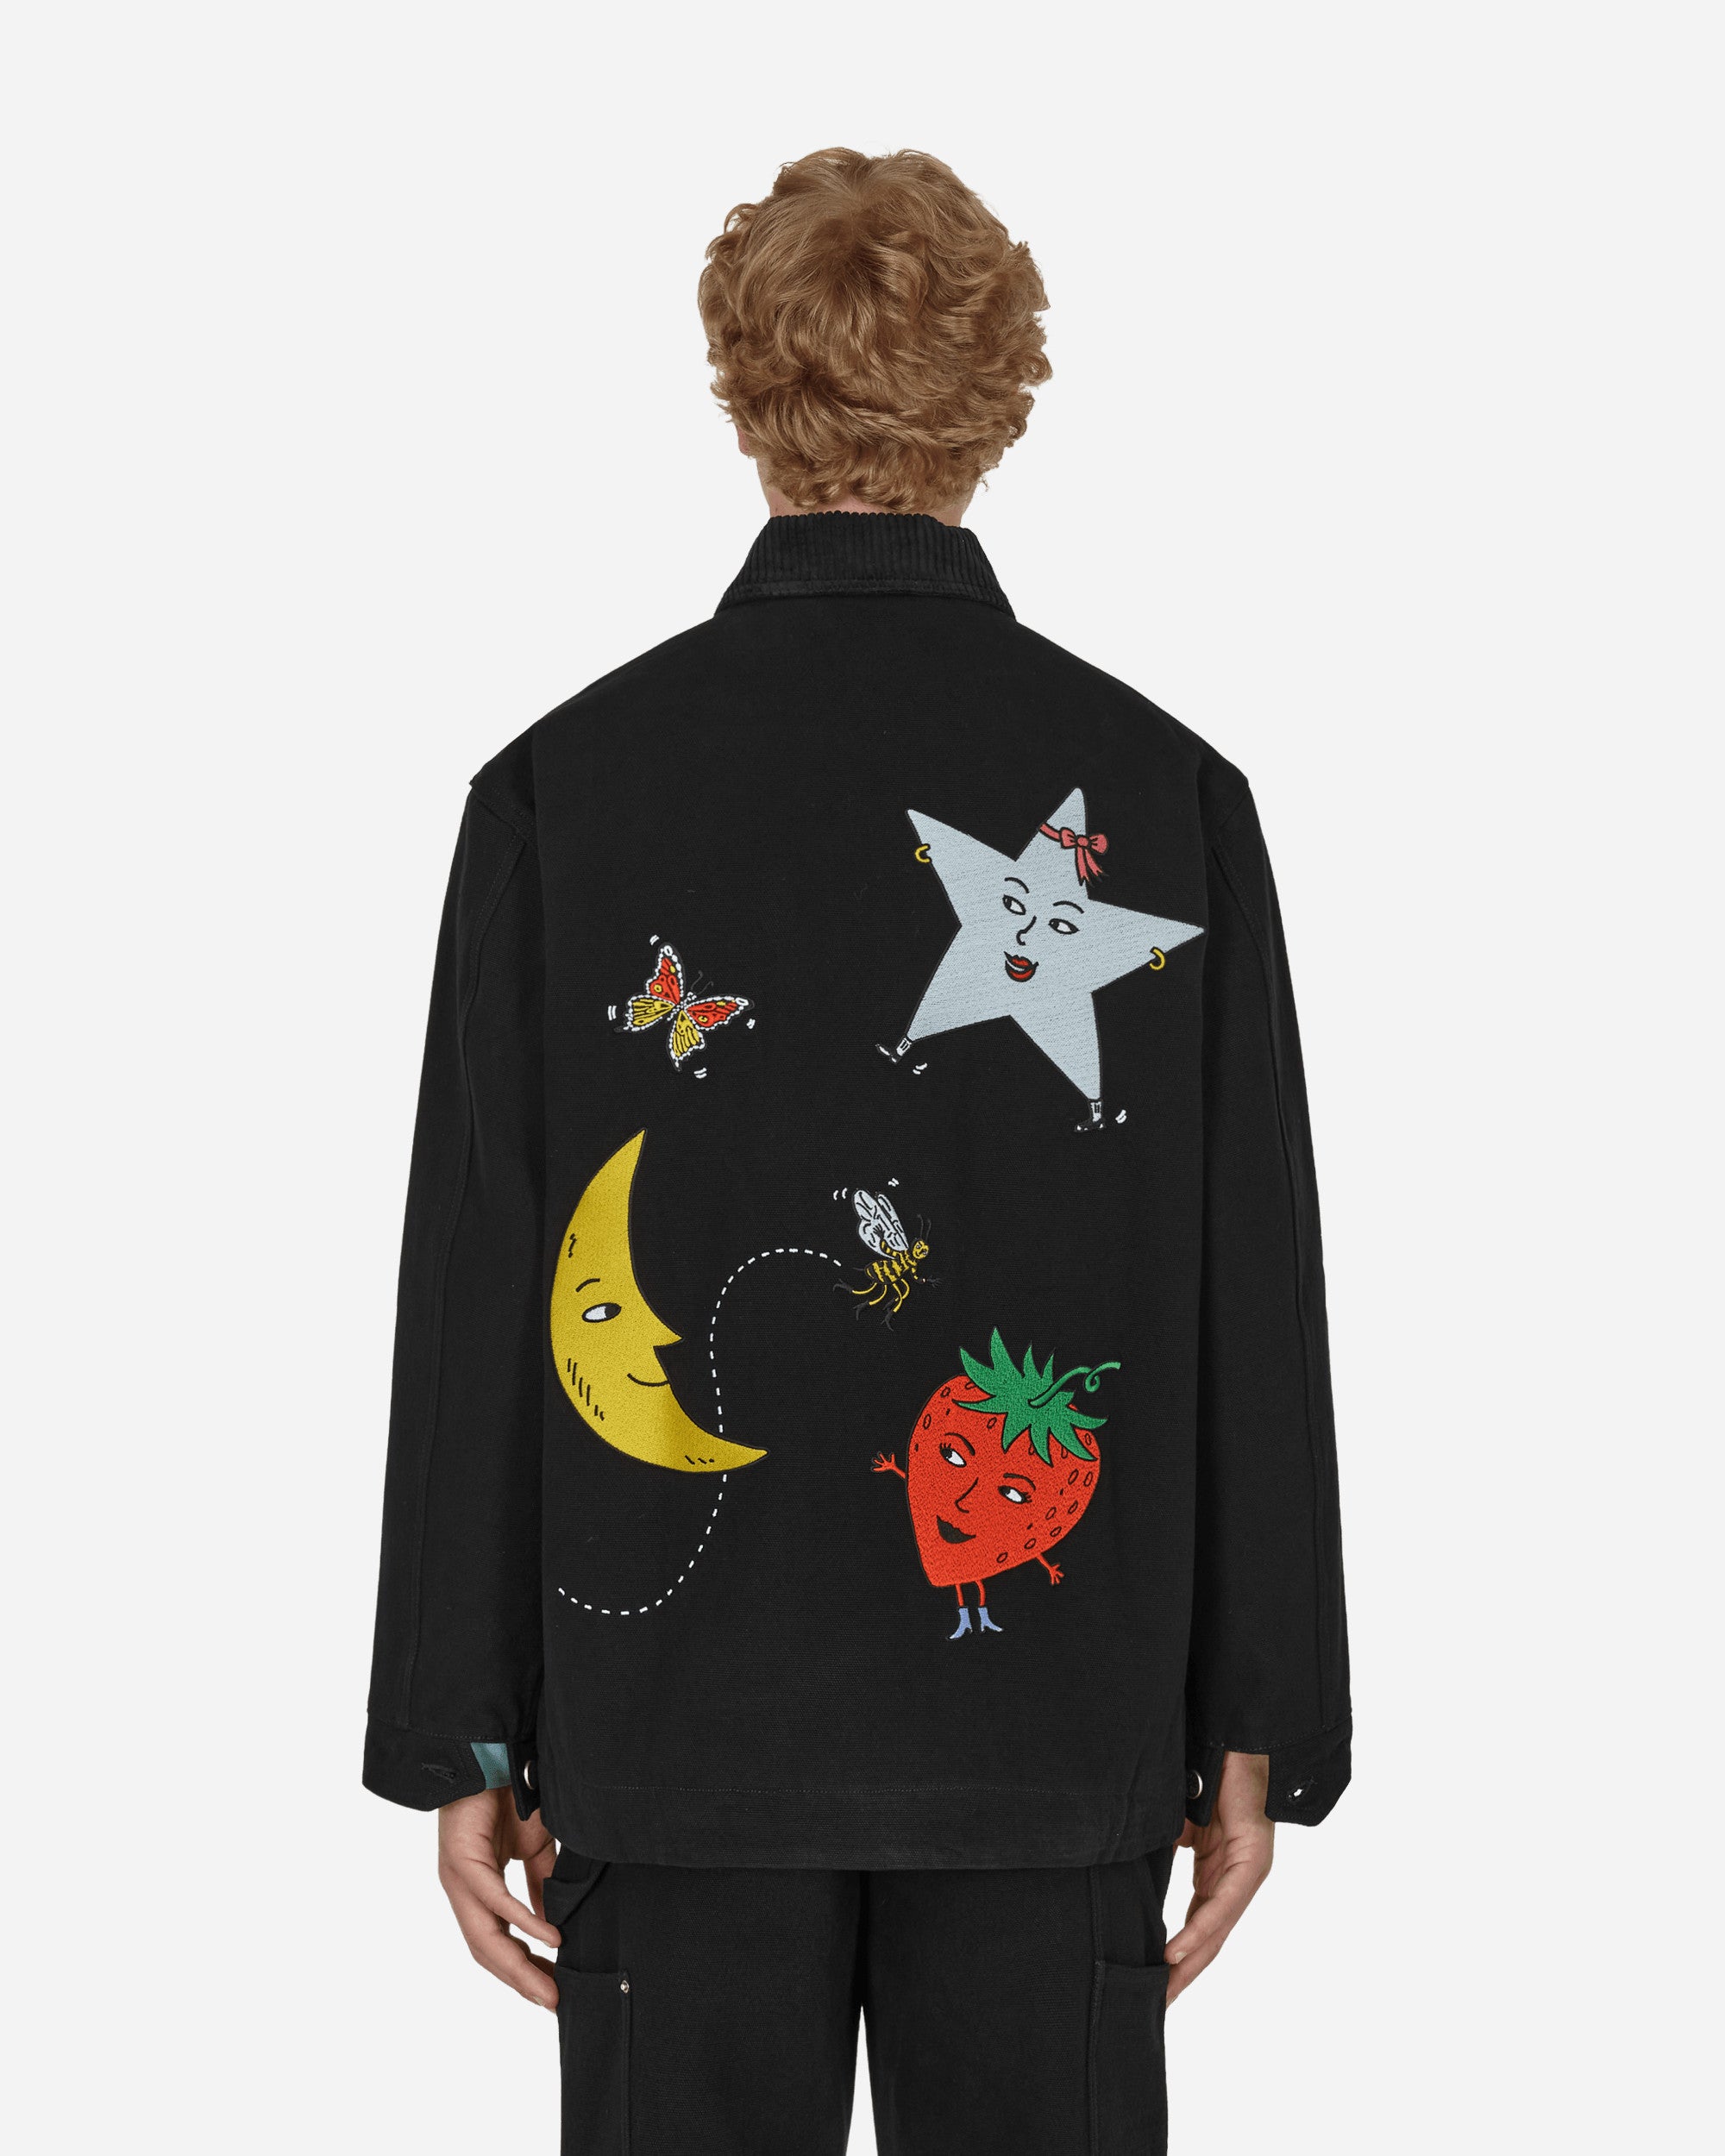 Sky High Farm Workwear Canvas Embroidered Chore Jacket Black Coats and Jackets Jackets SHF02C008 1